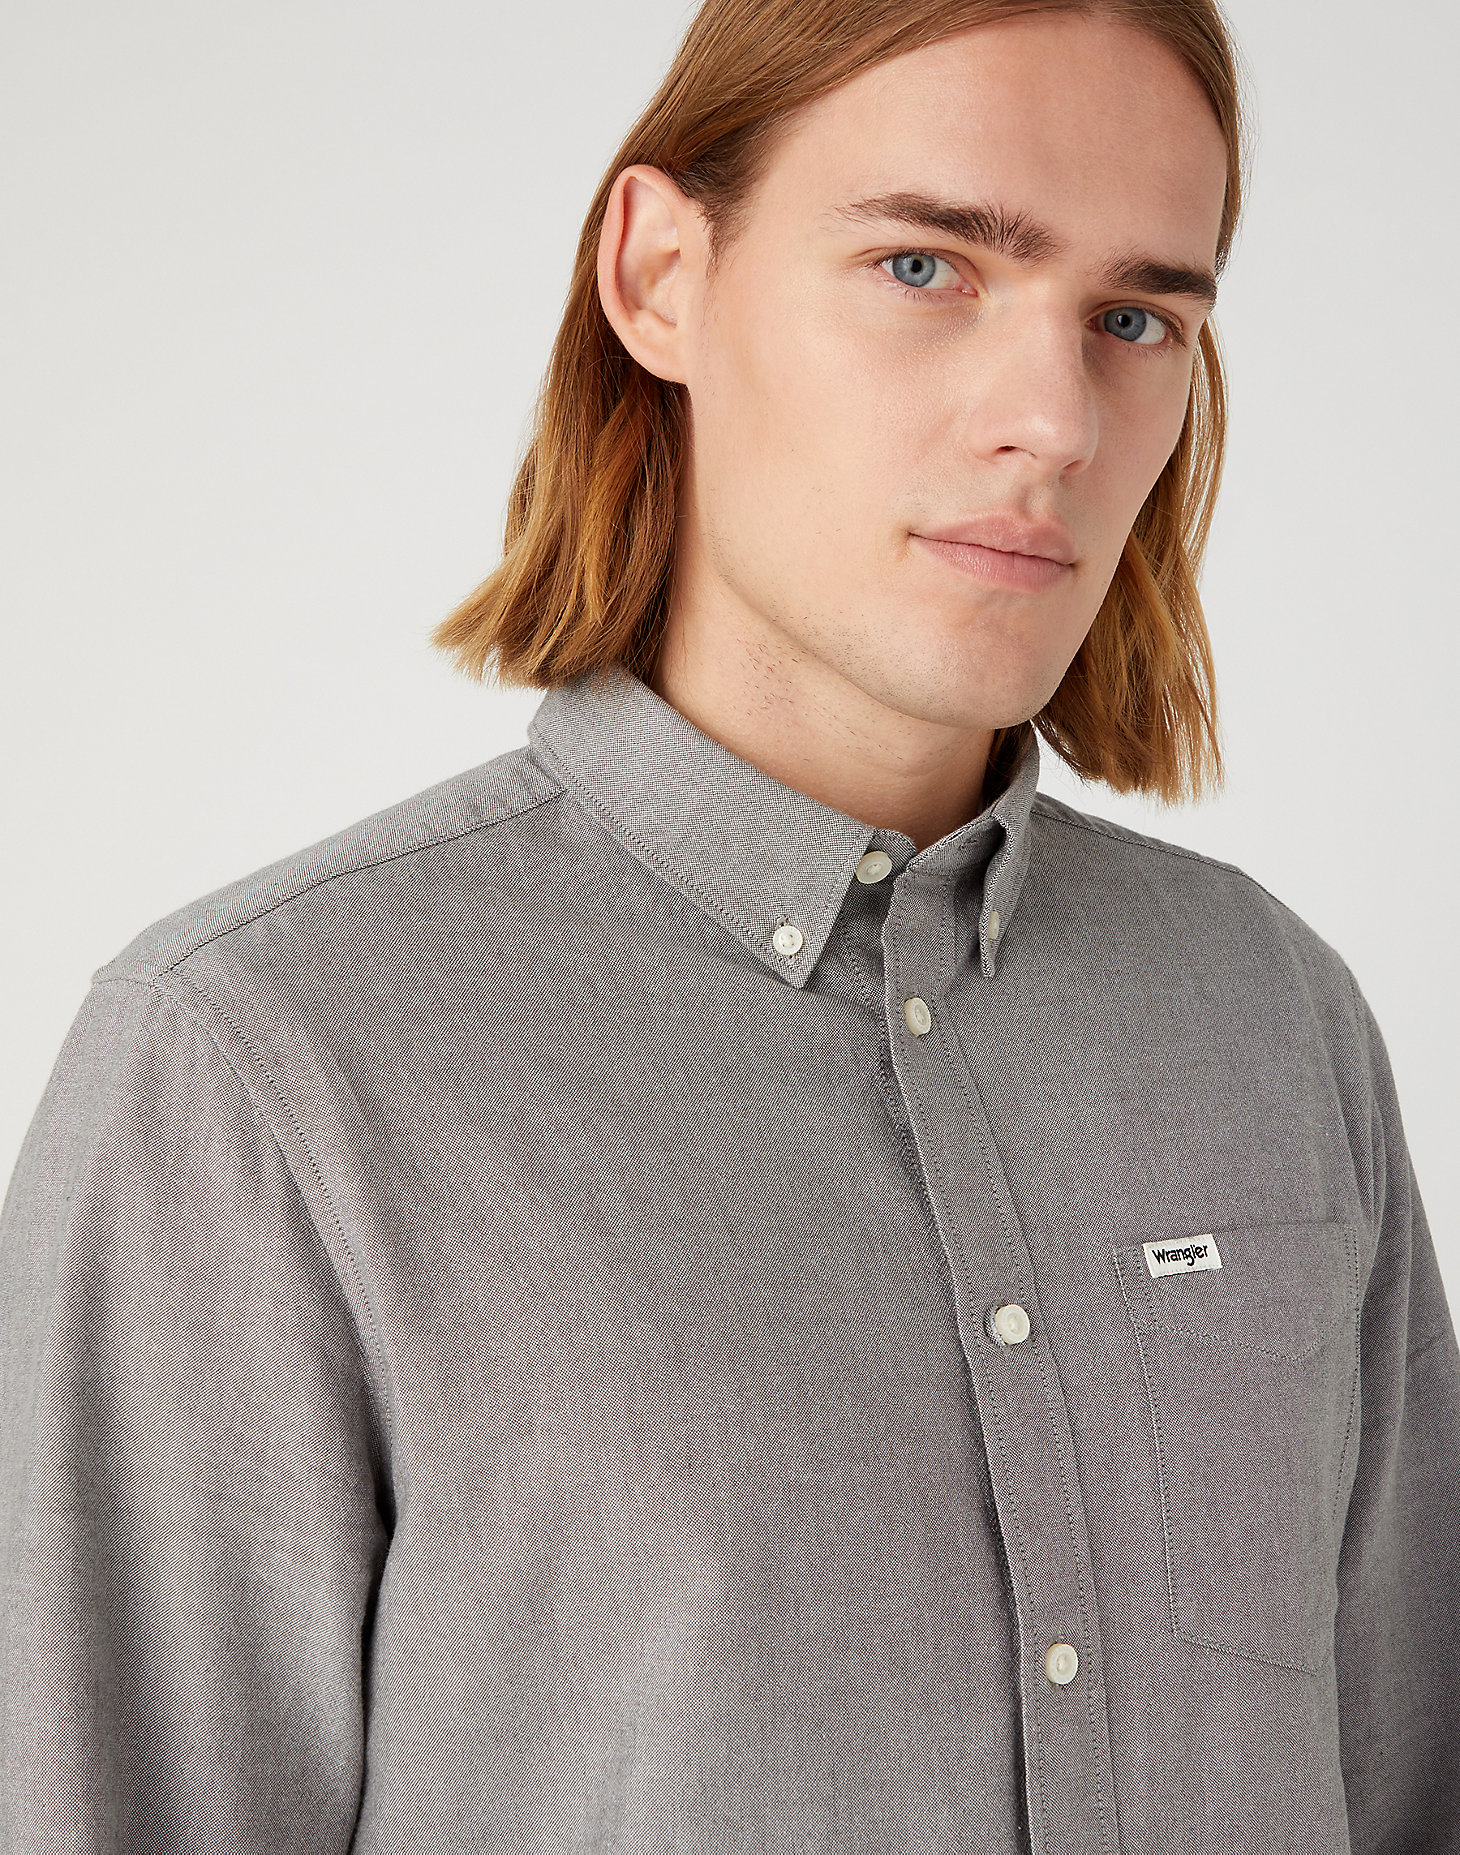 1 Pocket Button Down Shirt in Grey alternative view 3